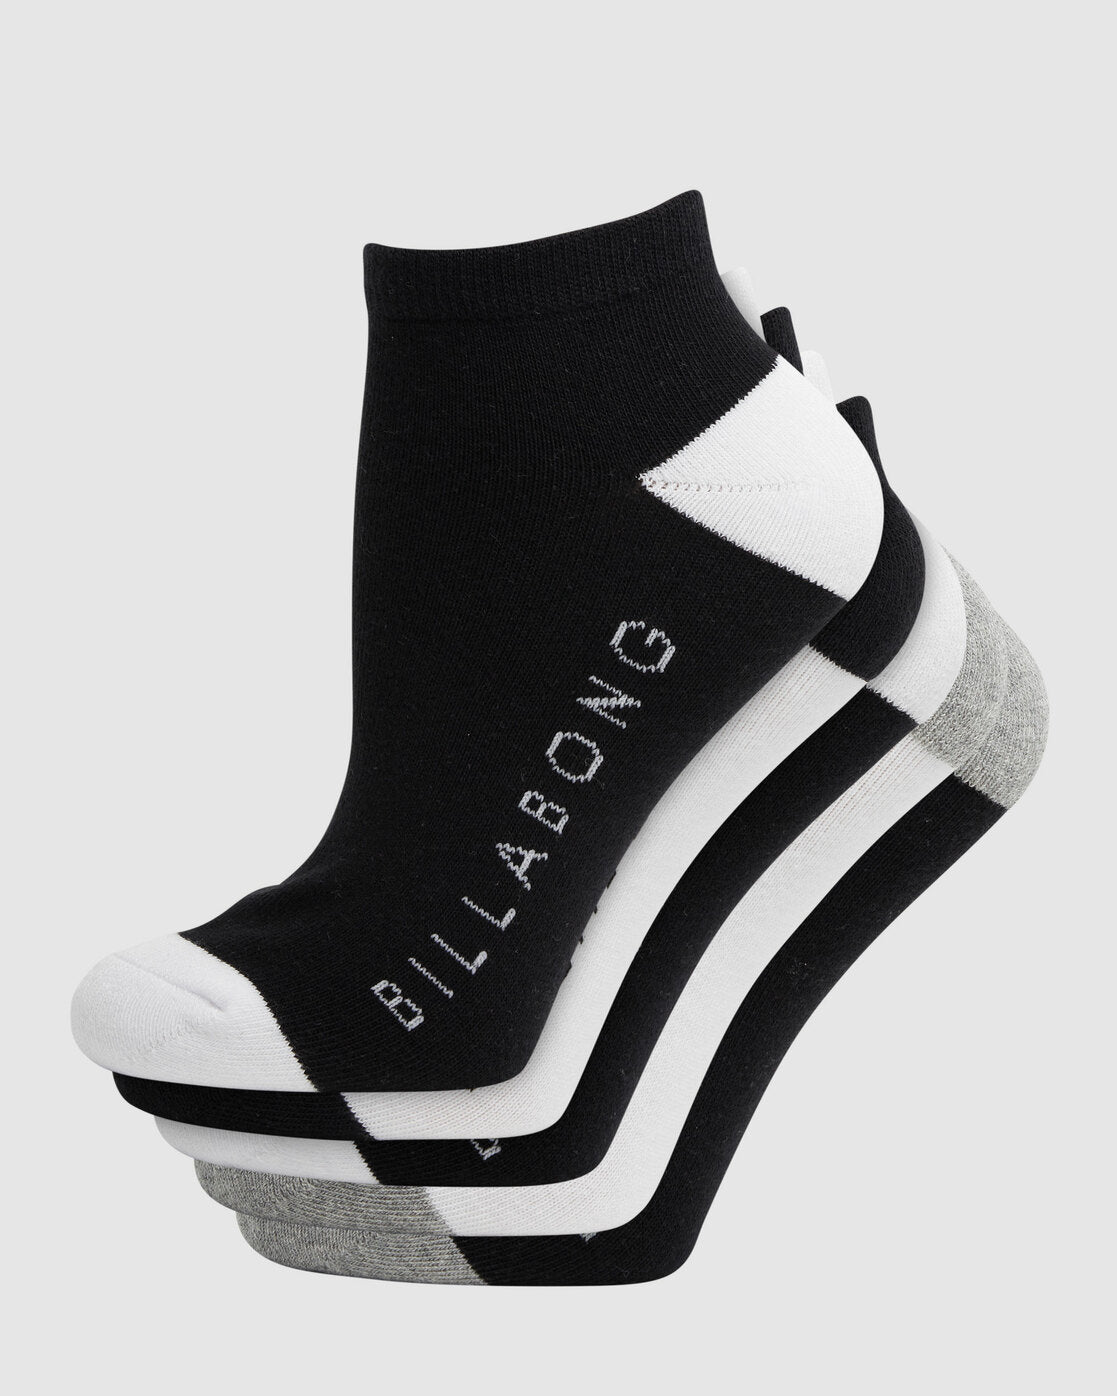 Billabong Serenity Socks 5 Pack - Black